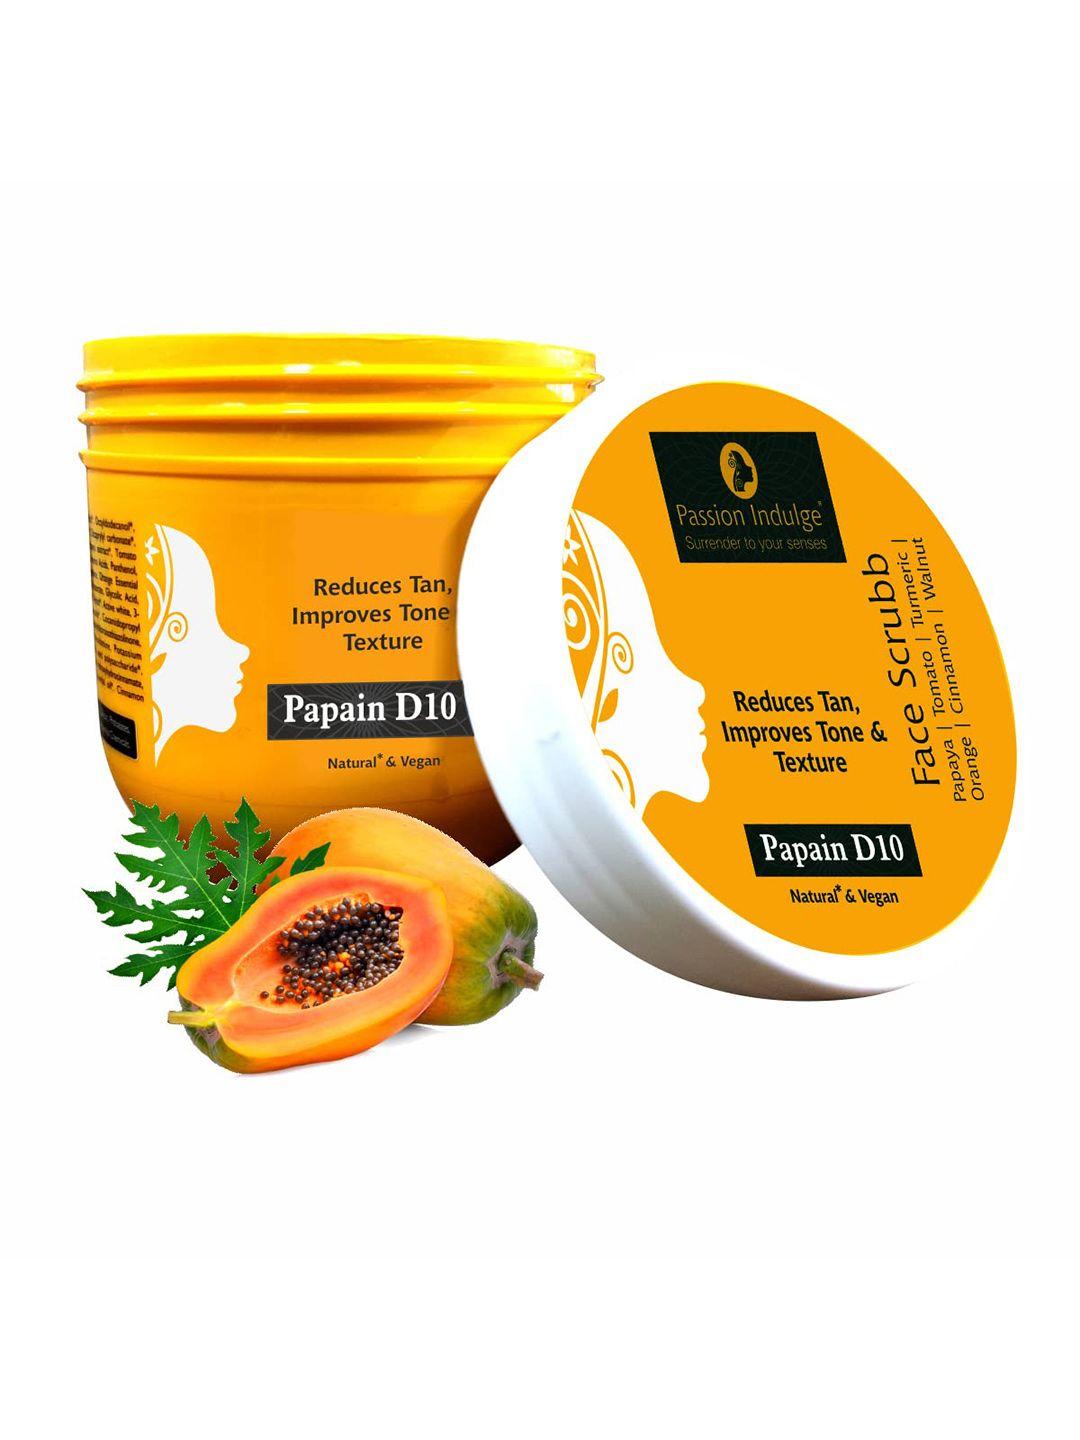 passion indulge natural & vegan papain d10 face scrub to reduce tan - 200 g